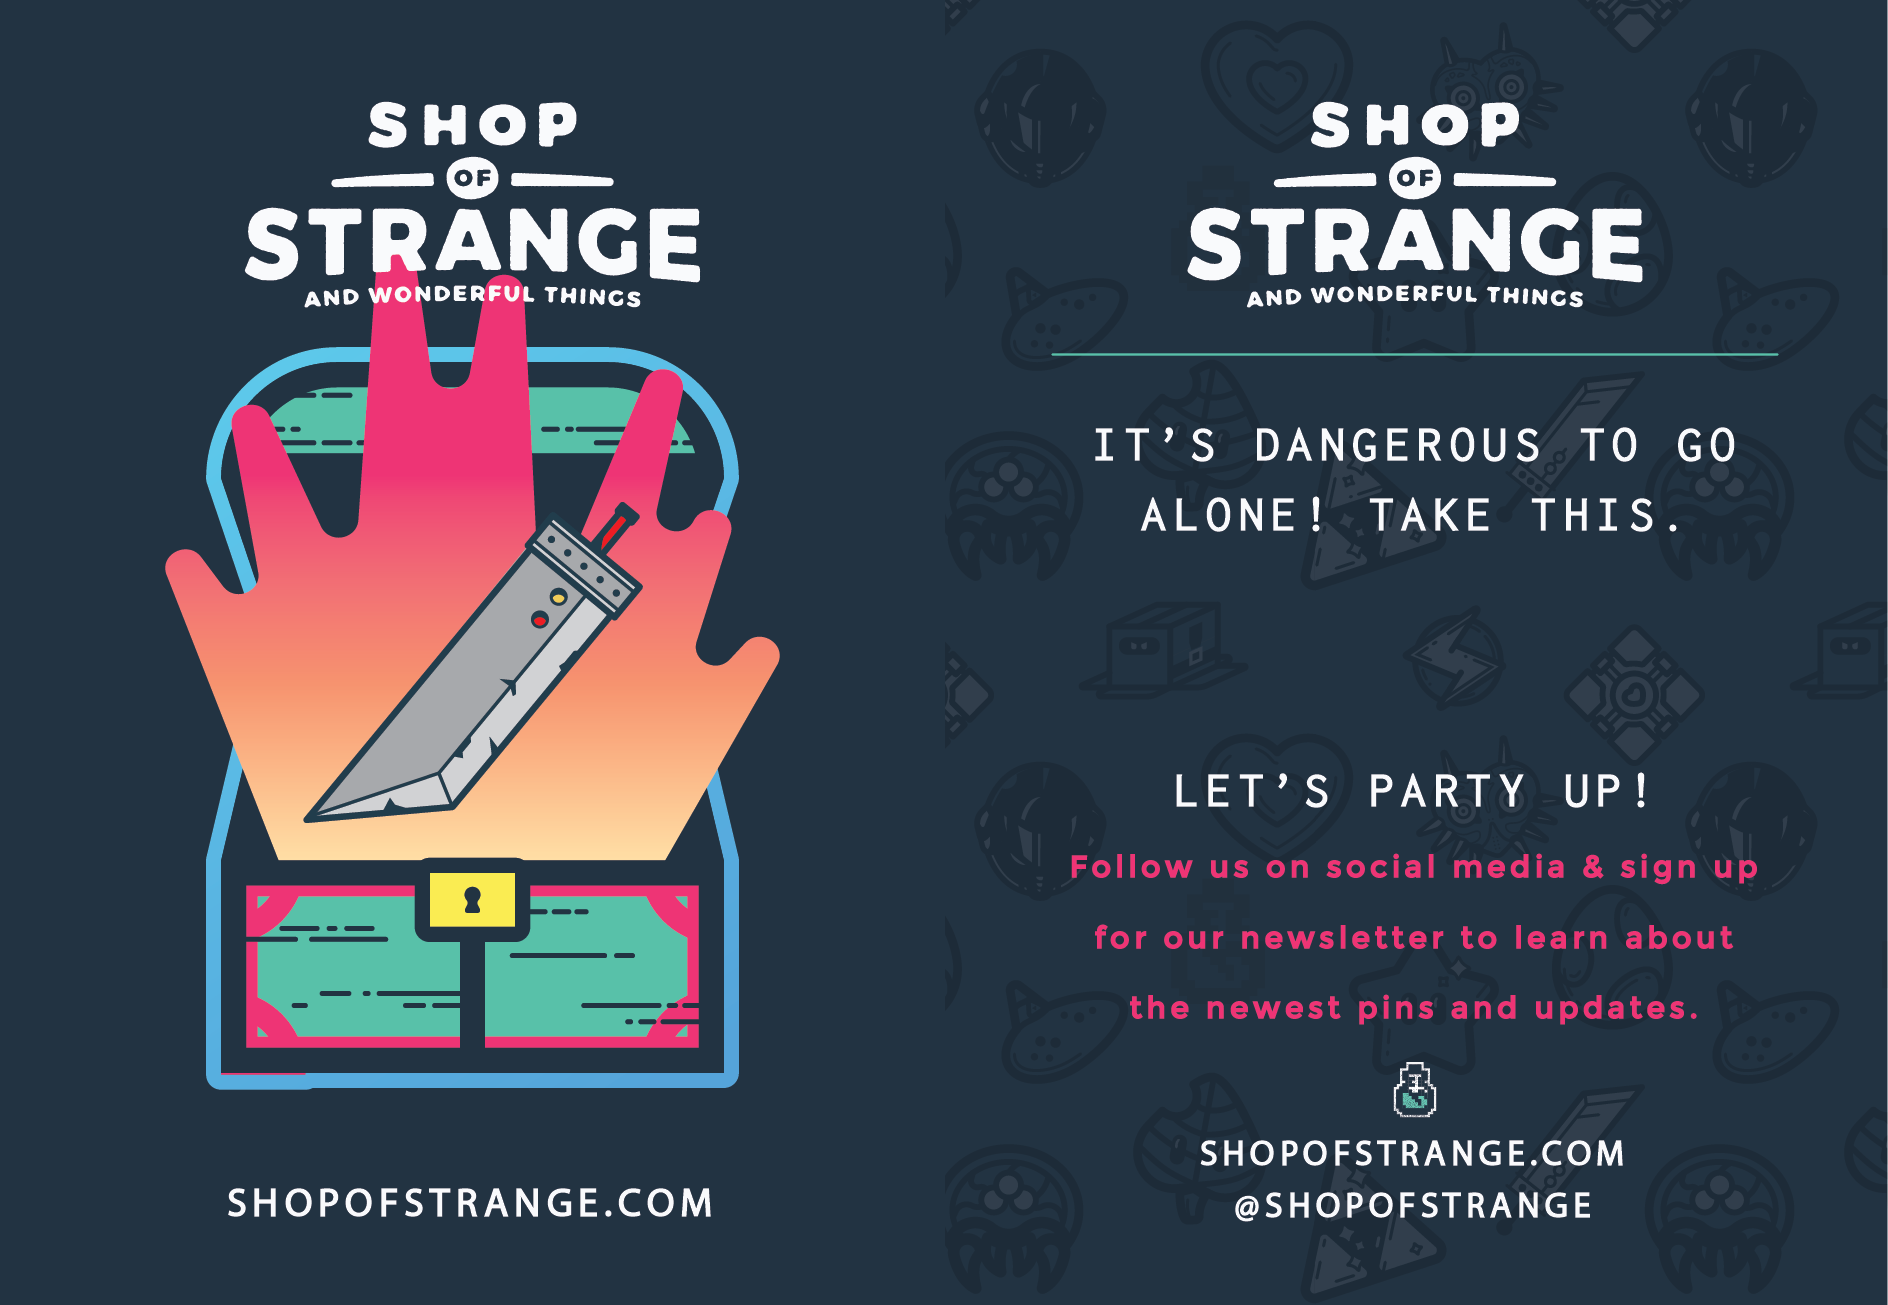 shop of strange backers